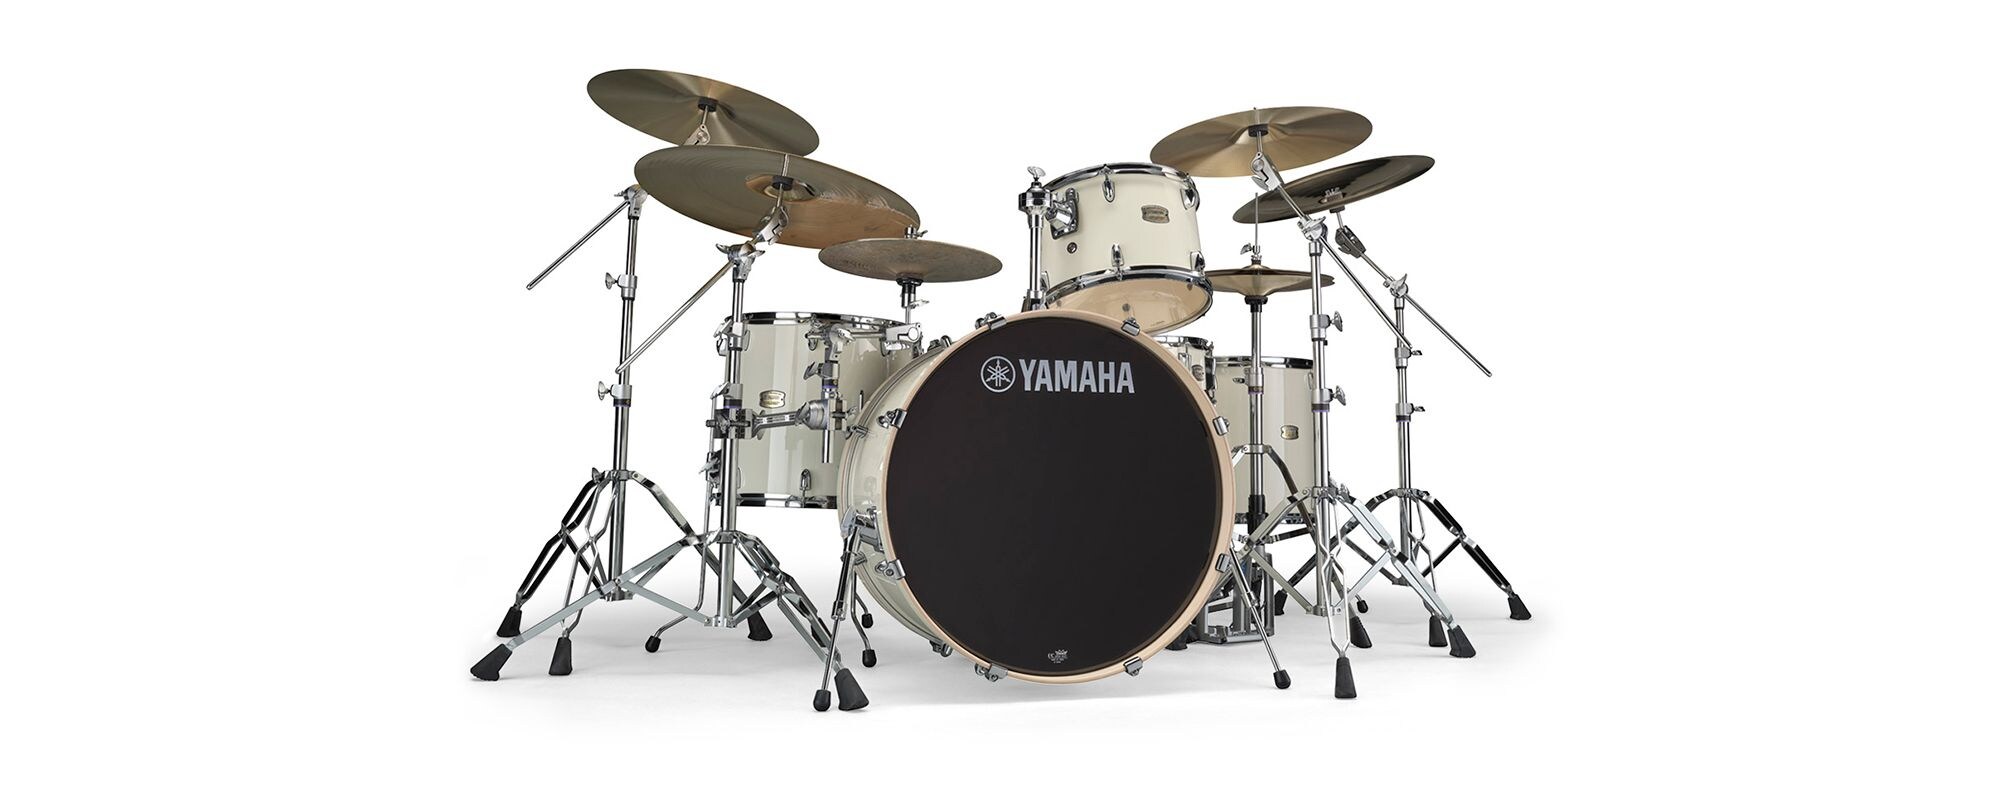 yamaha double bass drum set